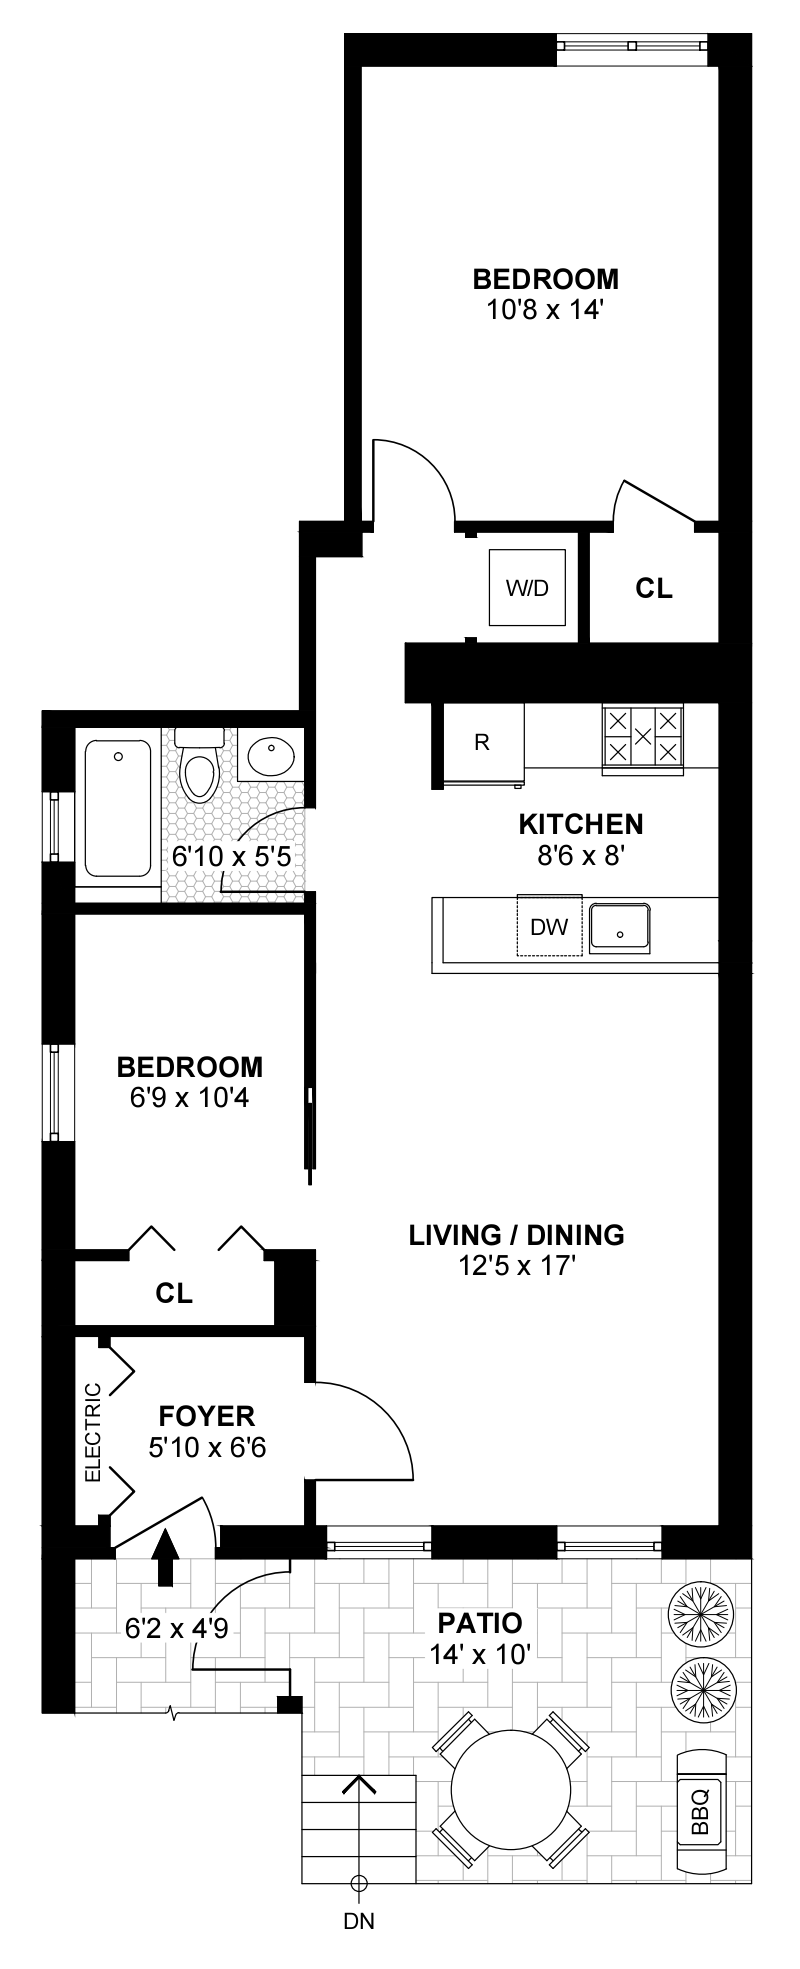 Floorplan for South Slope 2 Bedroom Charmer